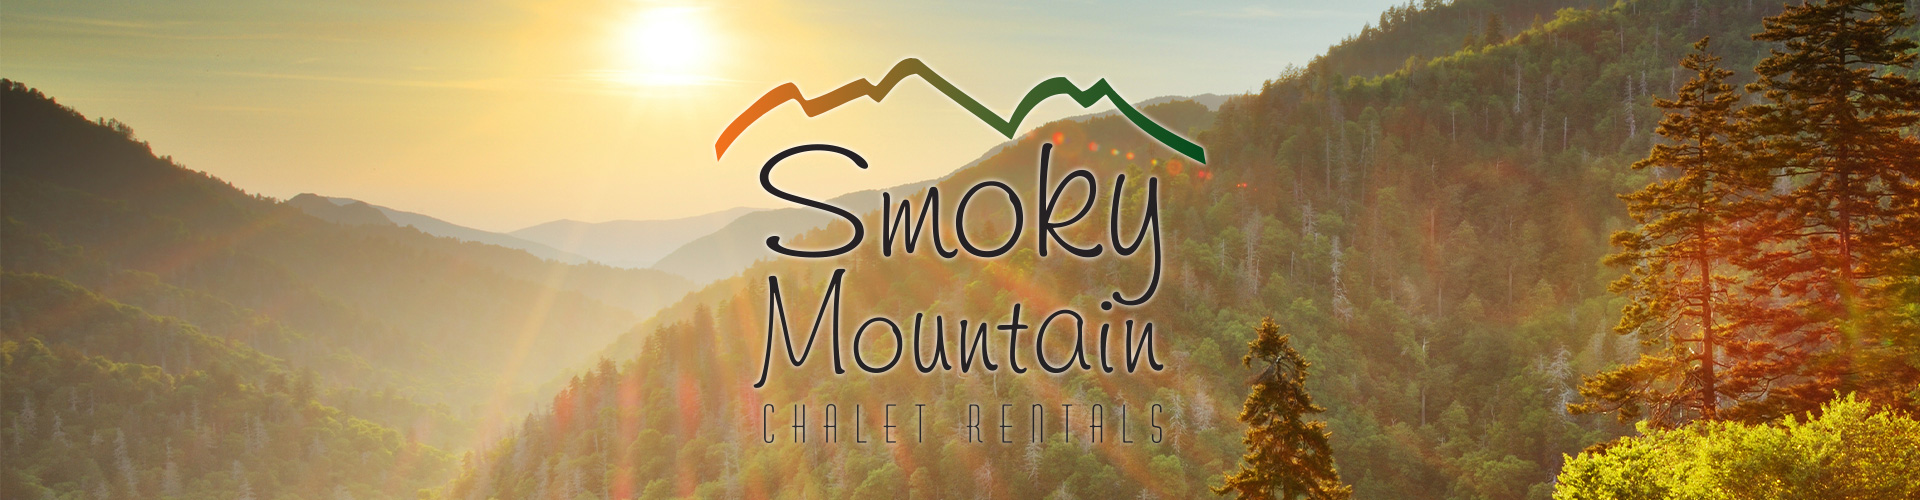 Smoky Mountain Chalet Rentals Banner